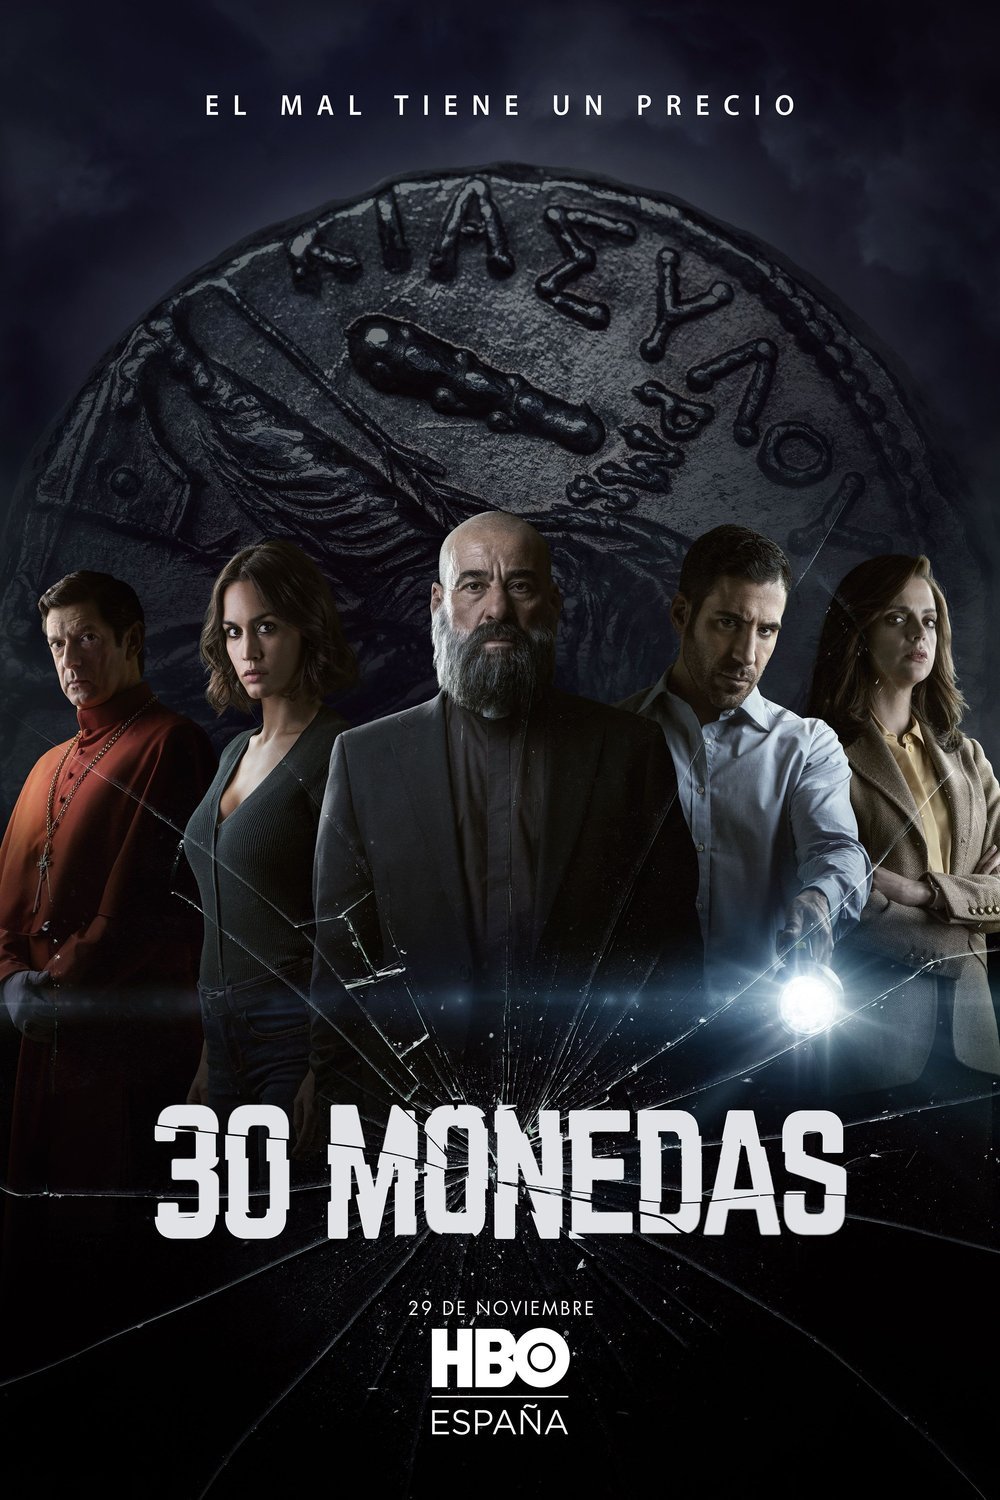 Spanish poster of the movie 30 Monedas